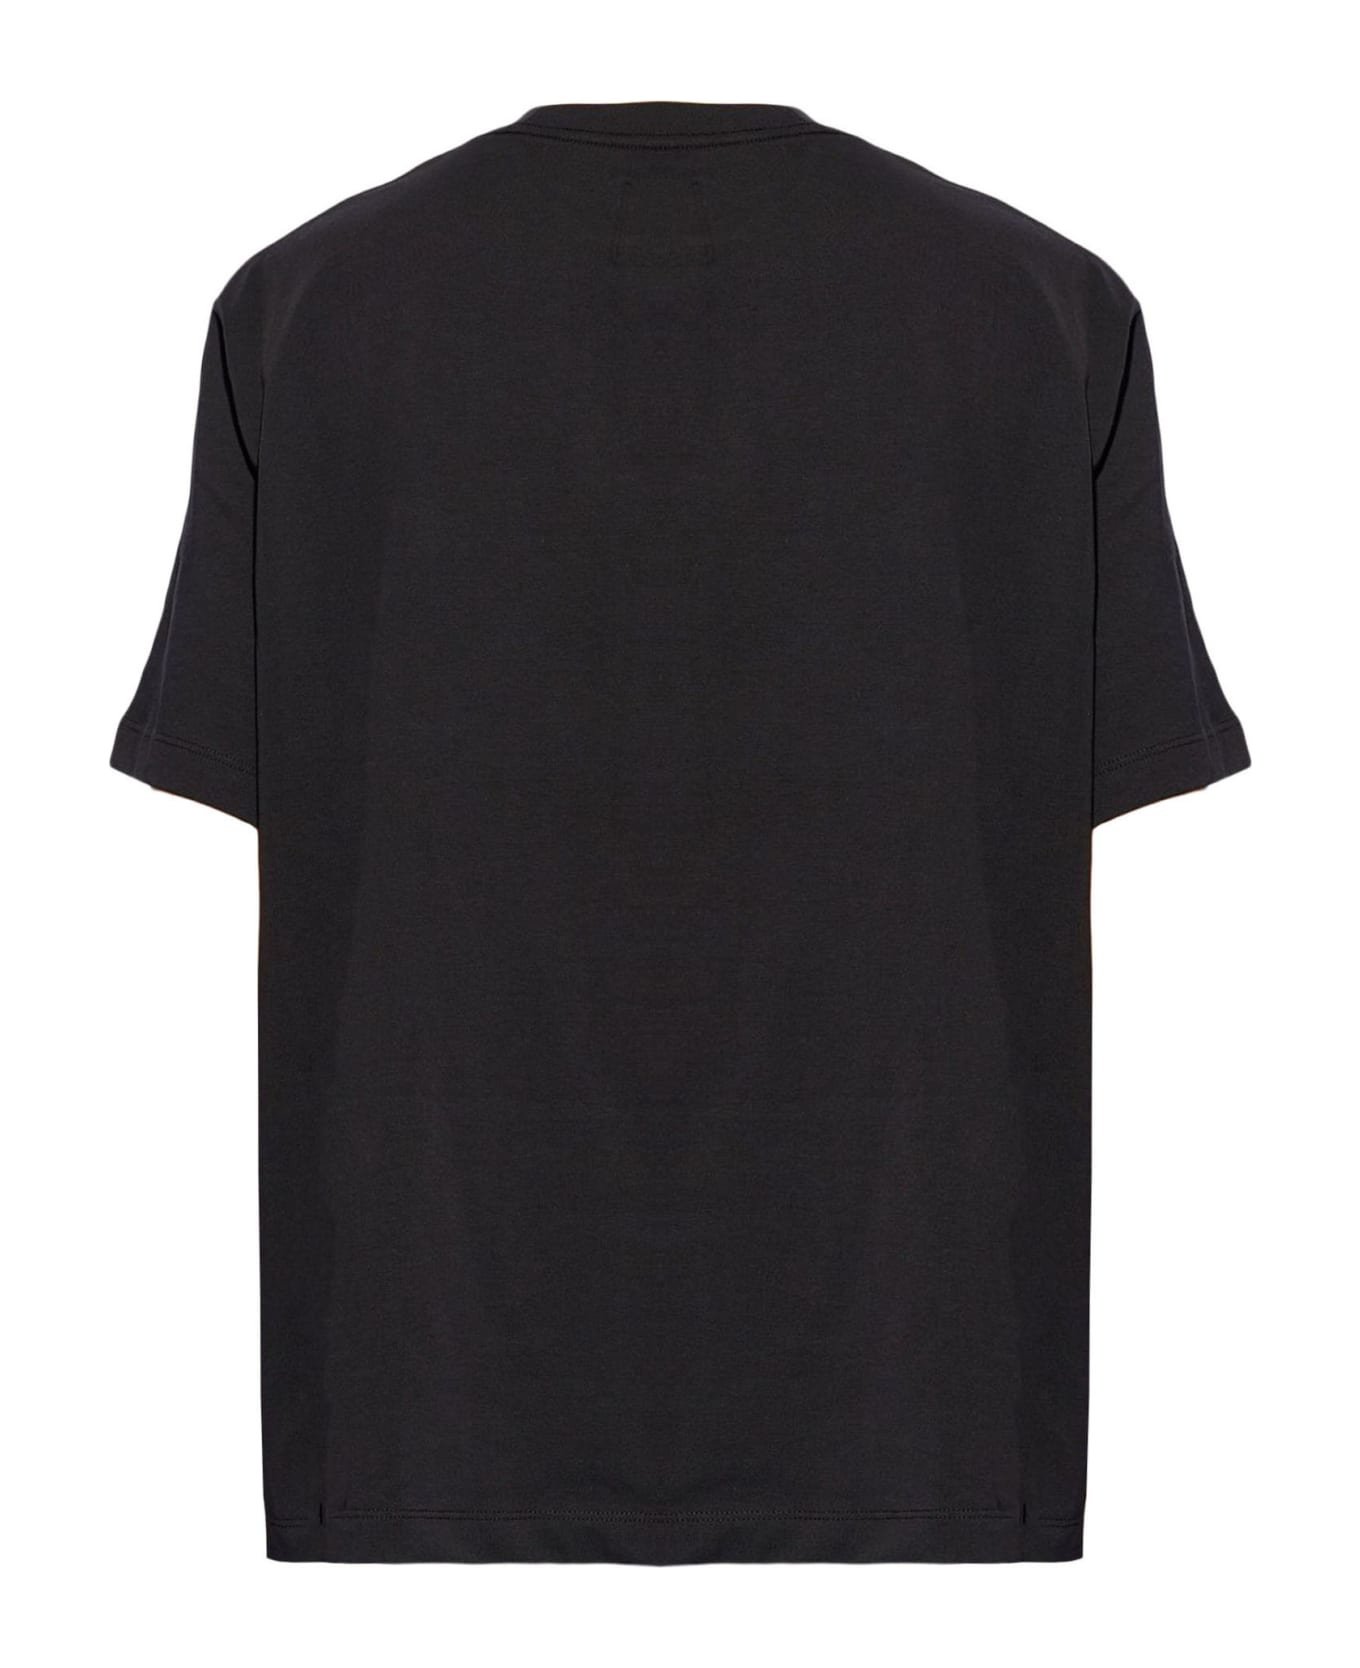 ROA Apparel T-shirts And Polos Black - Black シャツ